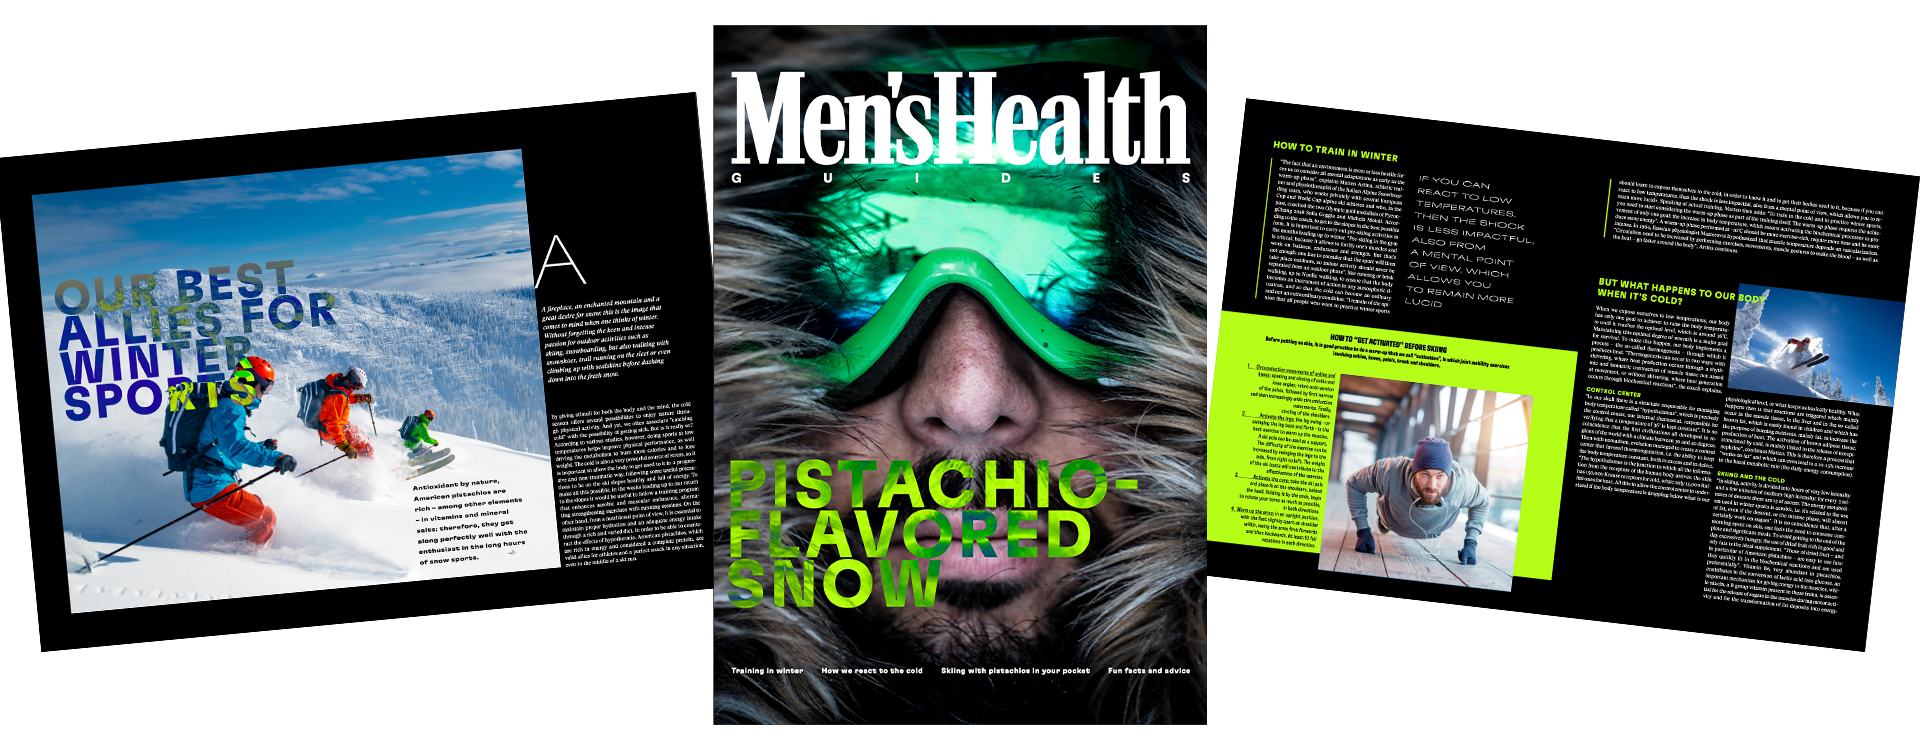 The Men's Health Guides: Pistachio-Flavored Snow